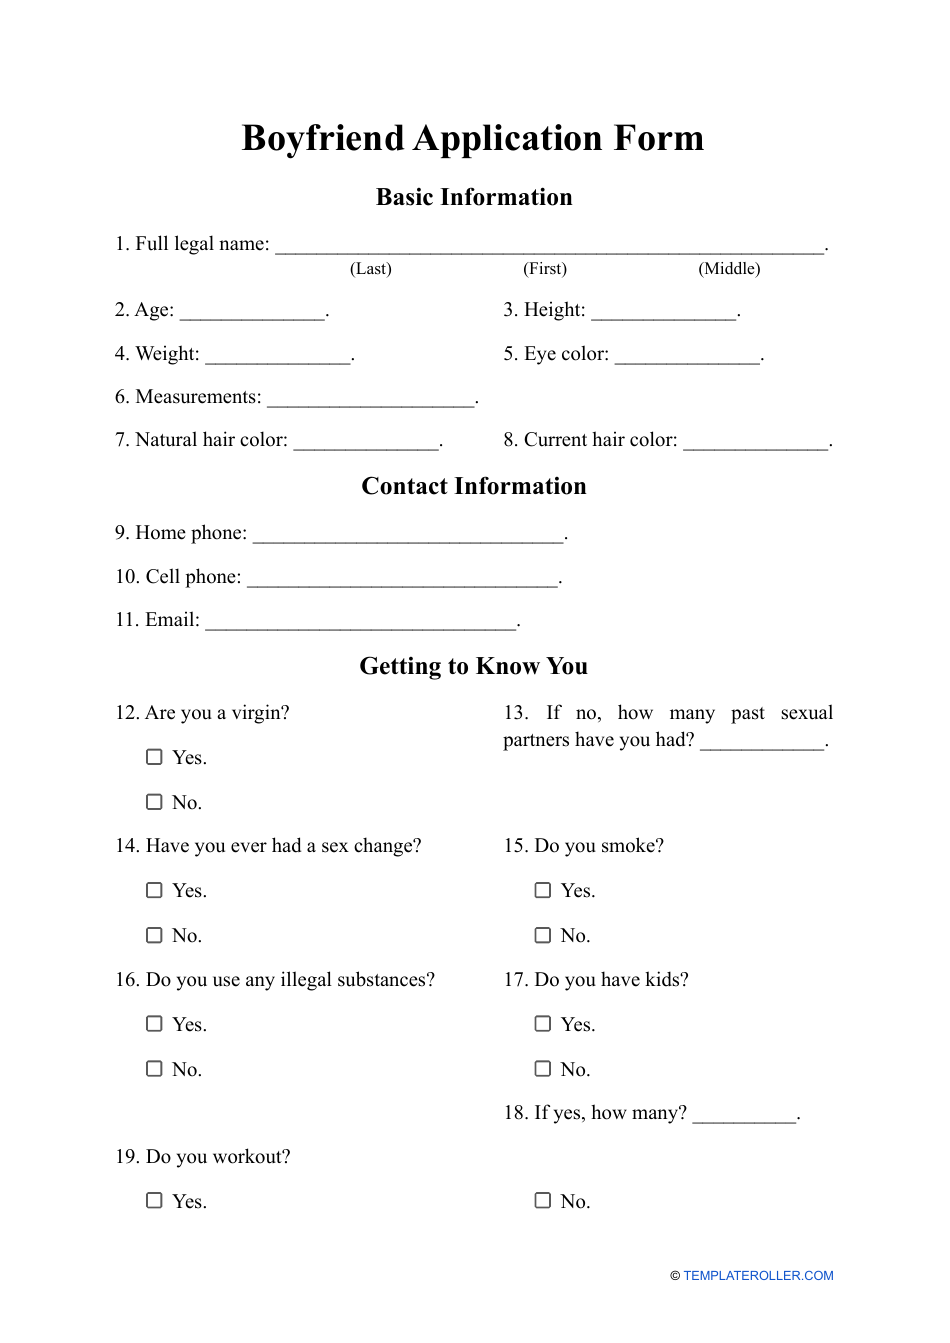 Boyfriend Application Form, Page 1